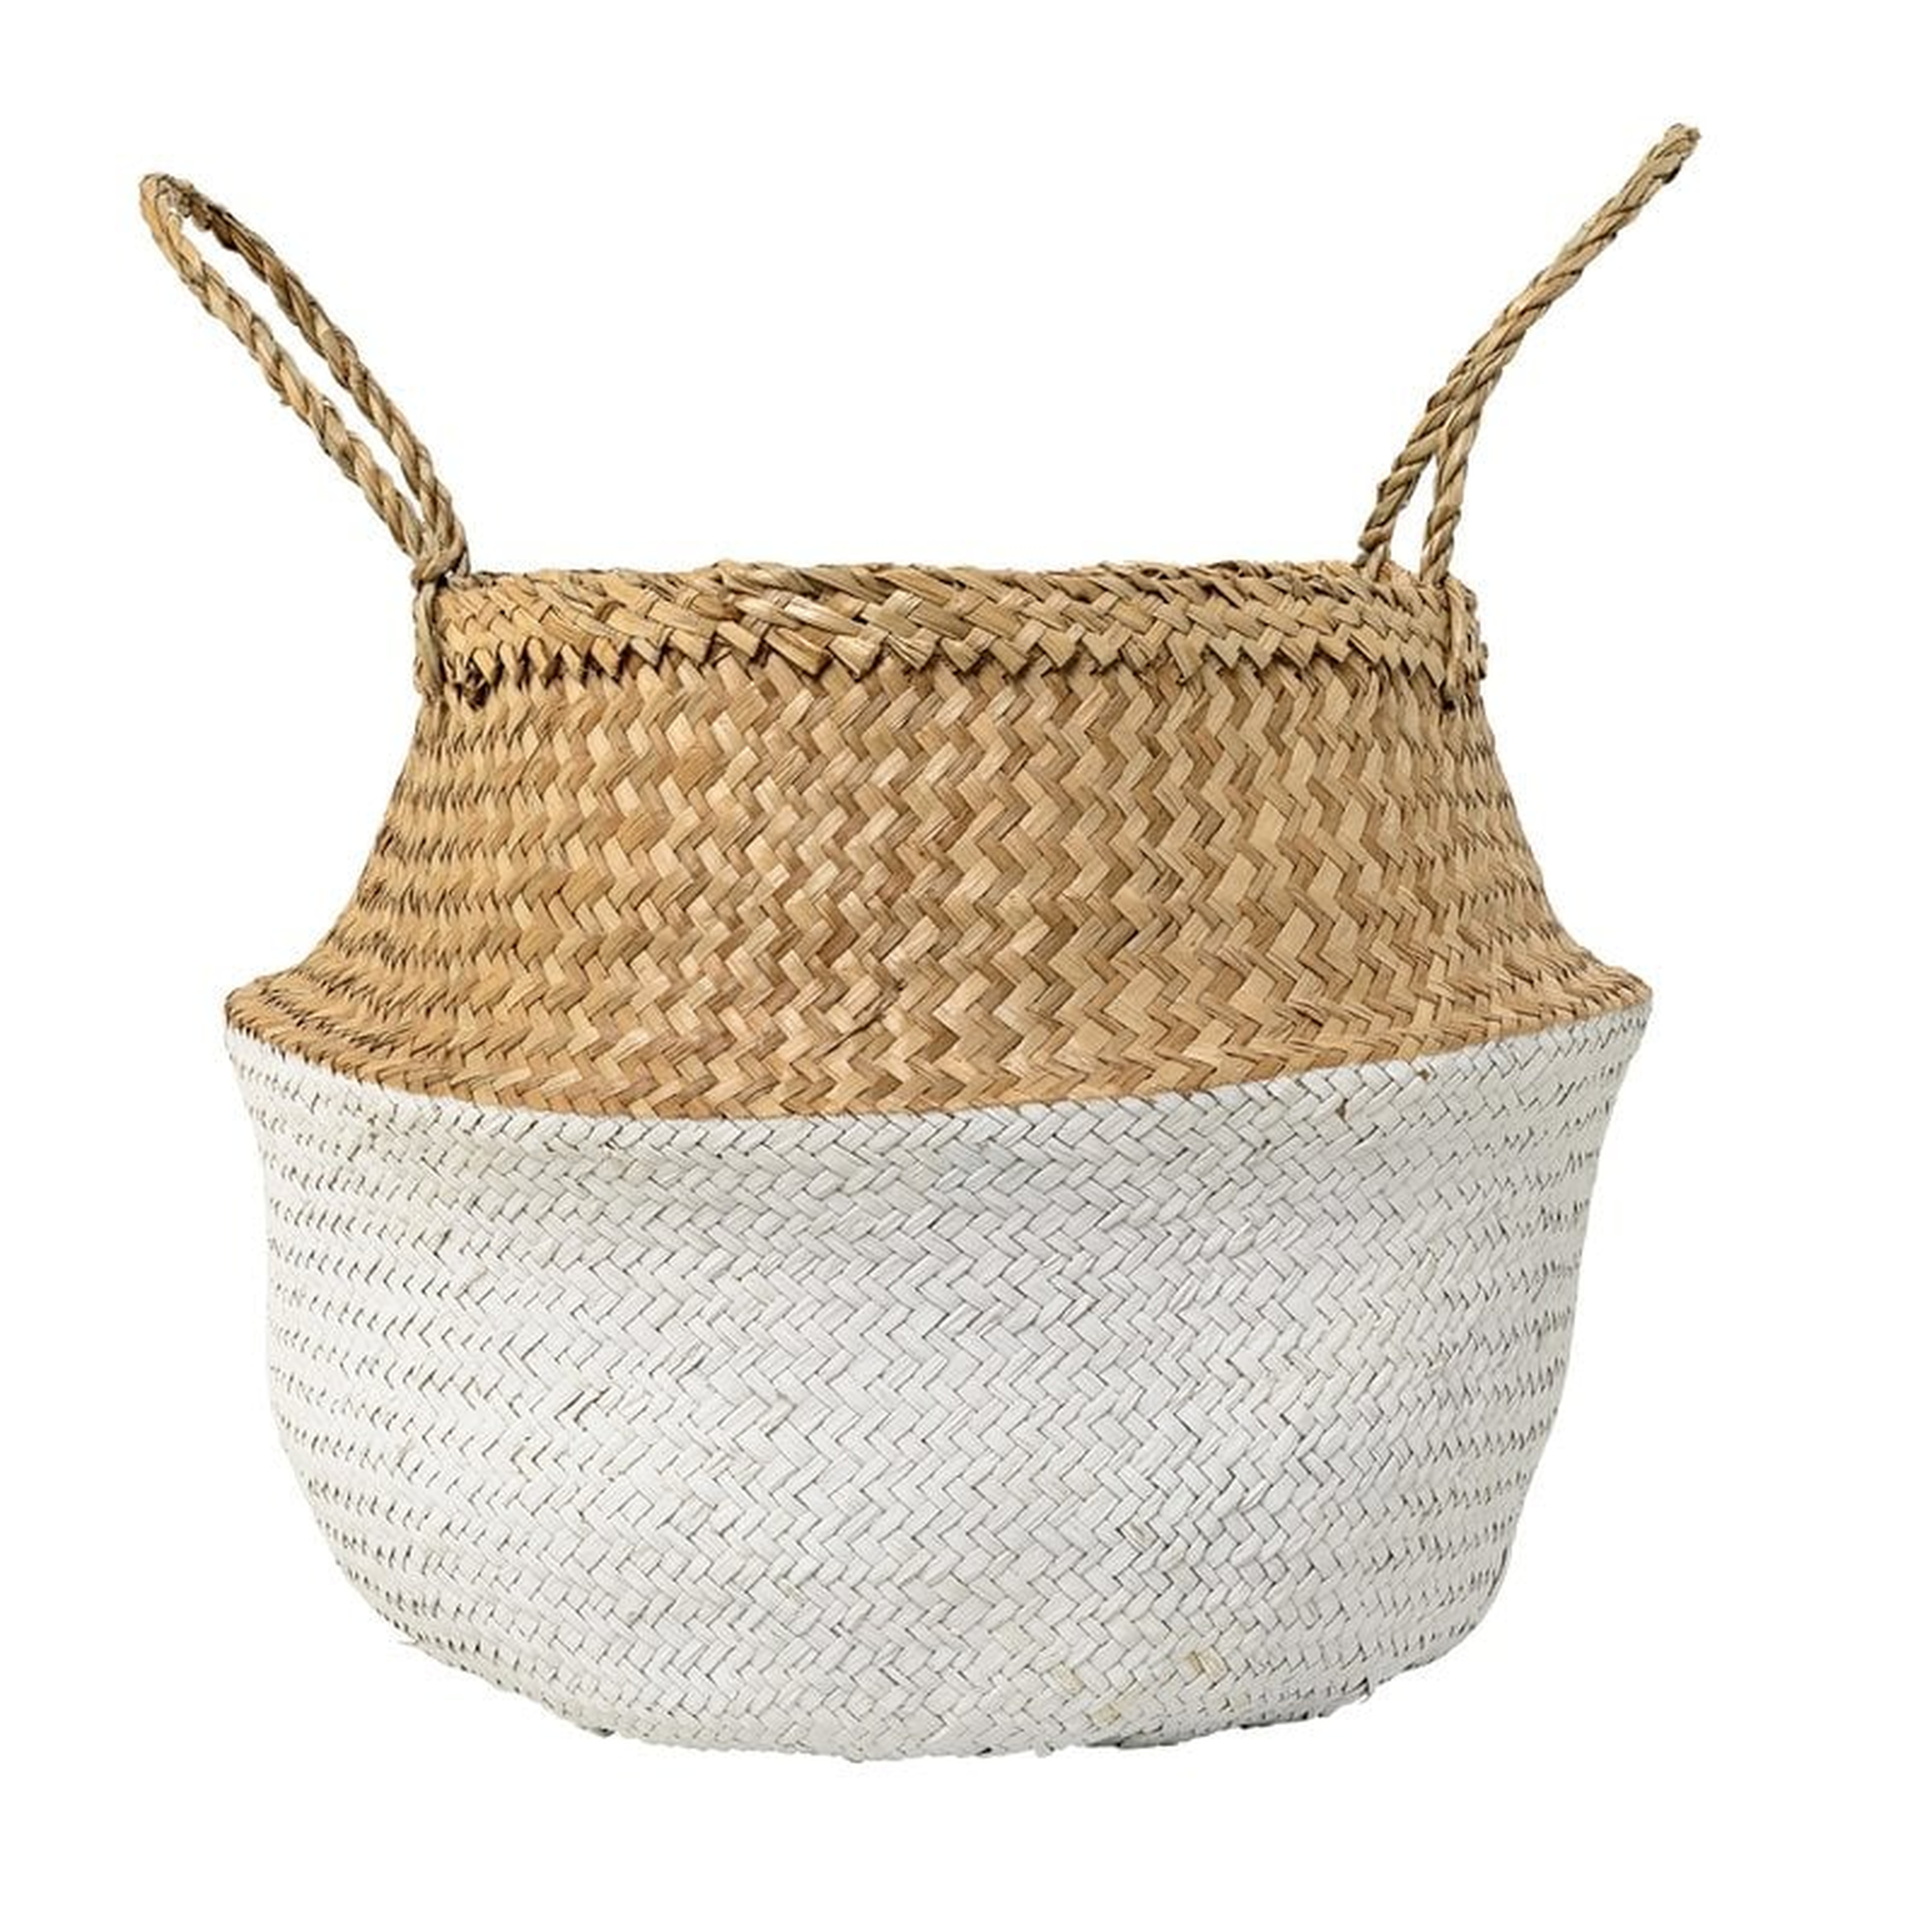 Seagrass Basket with Handles-natural - Wayfair